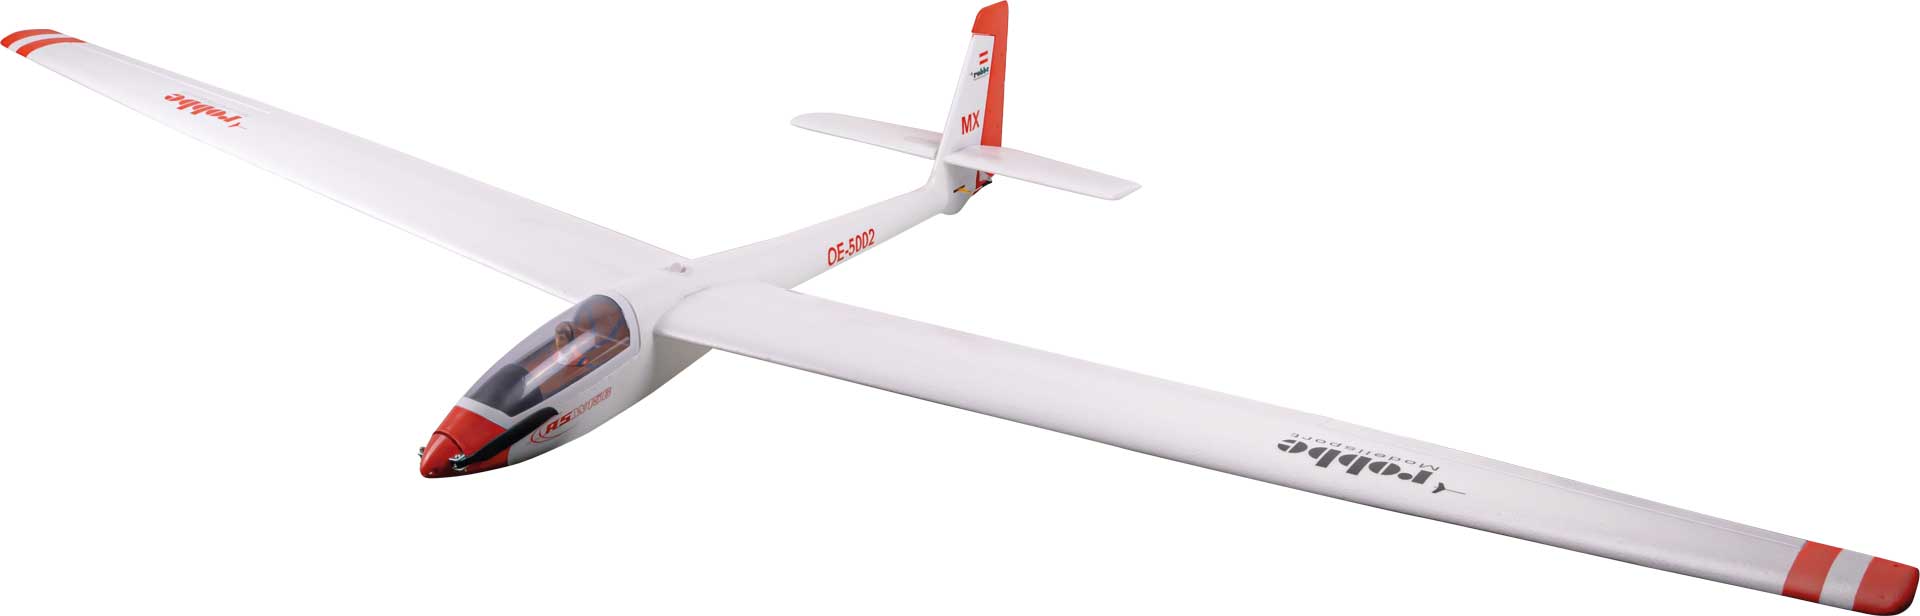 Robbe Modellsport ASW 15B KIT aus EPO ohne Elektronik Elektrosegelflugmodell